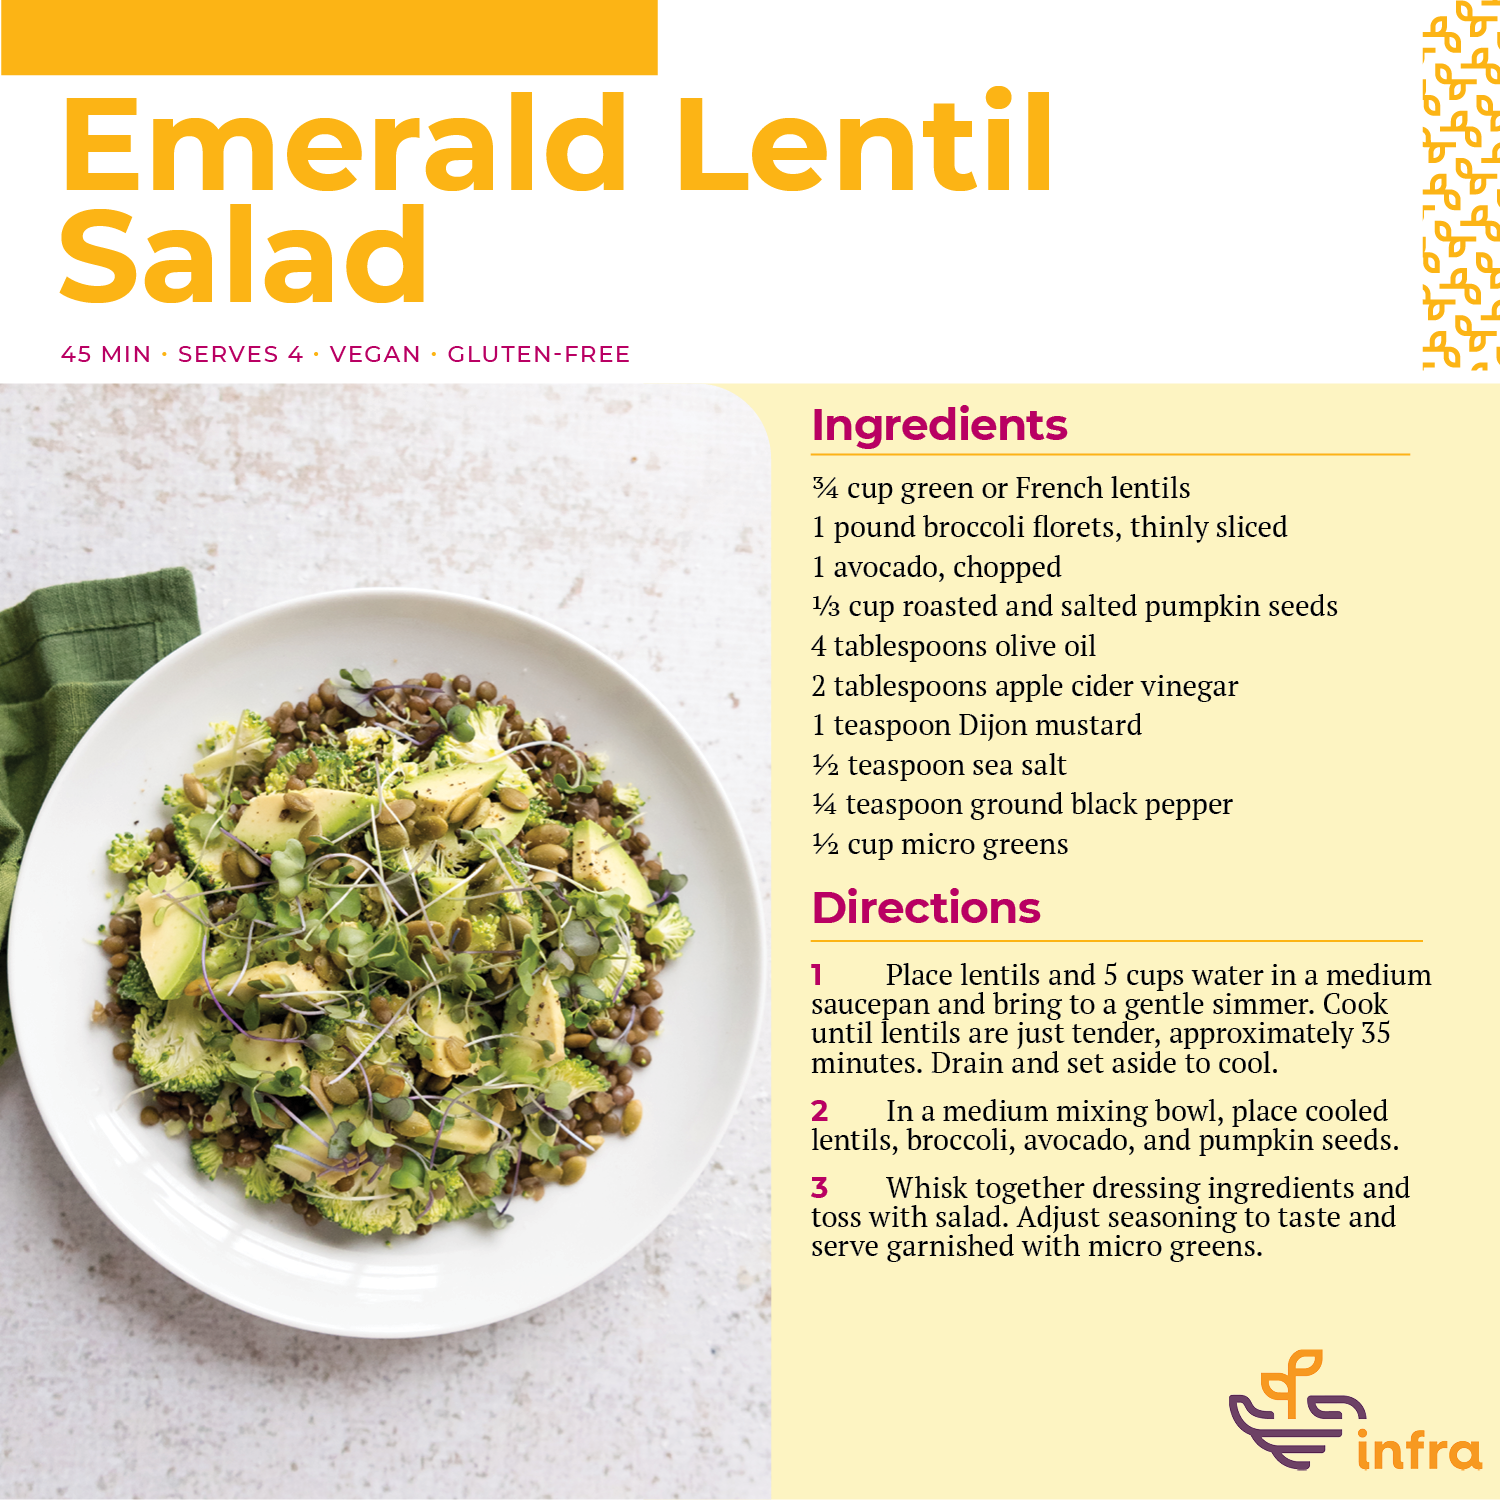 Emerald Lentil Salad Recipe and Image.png